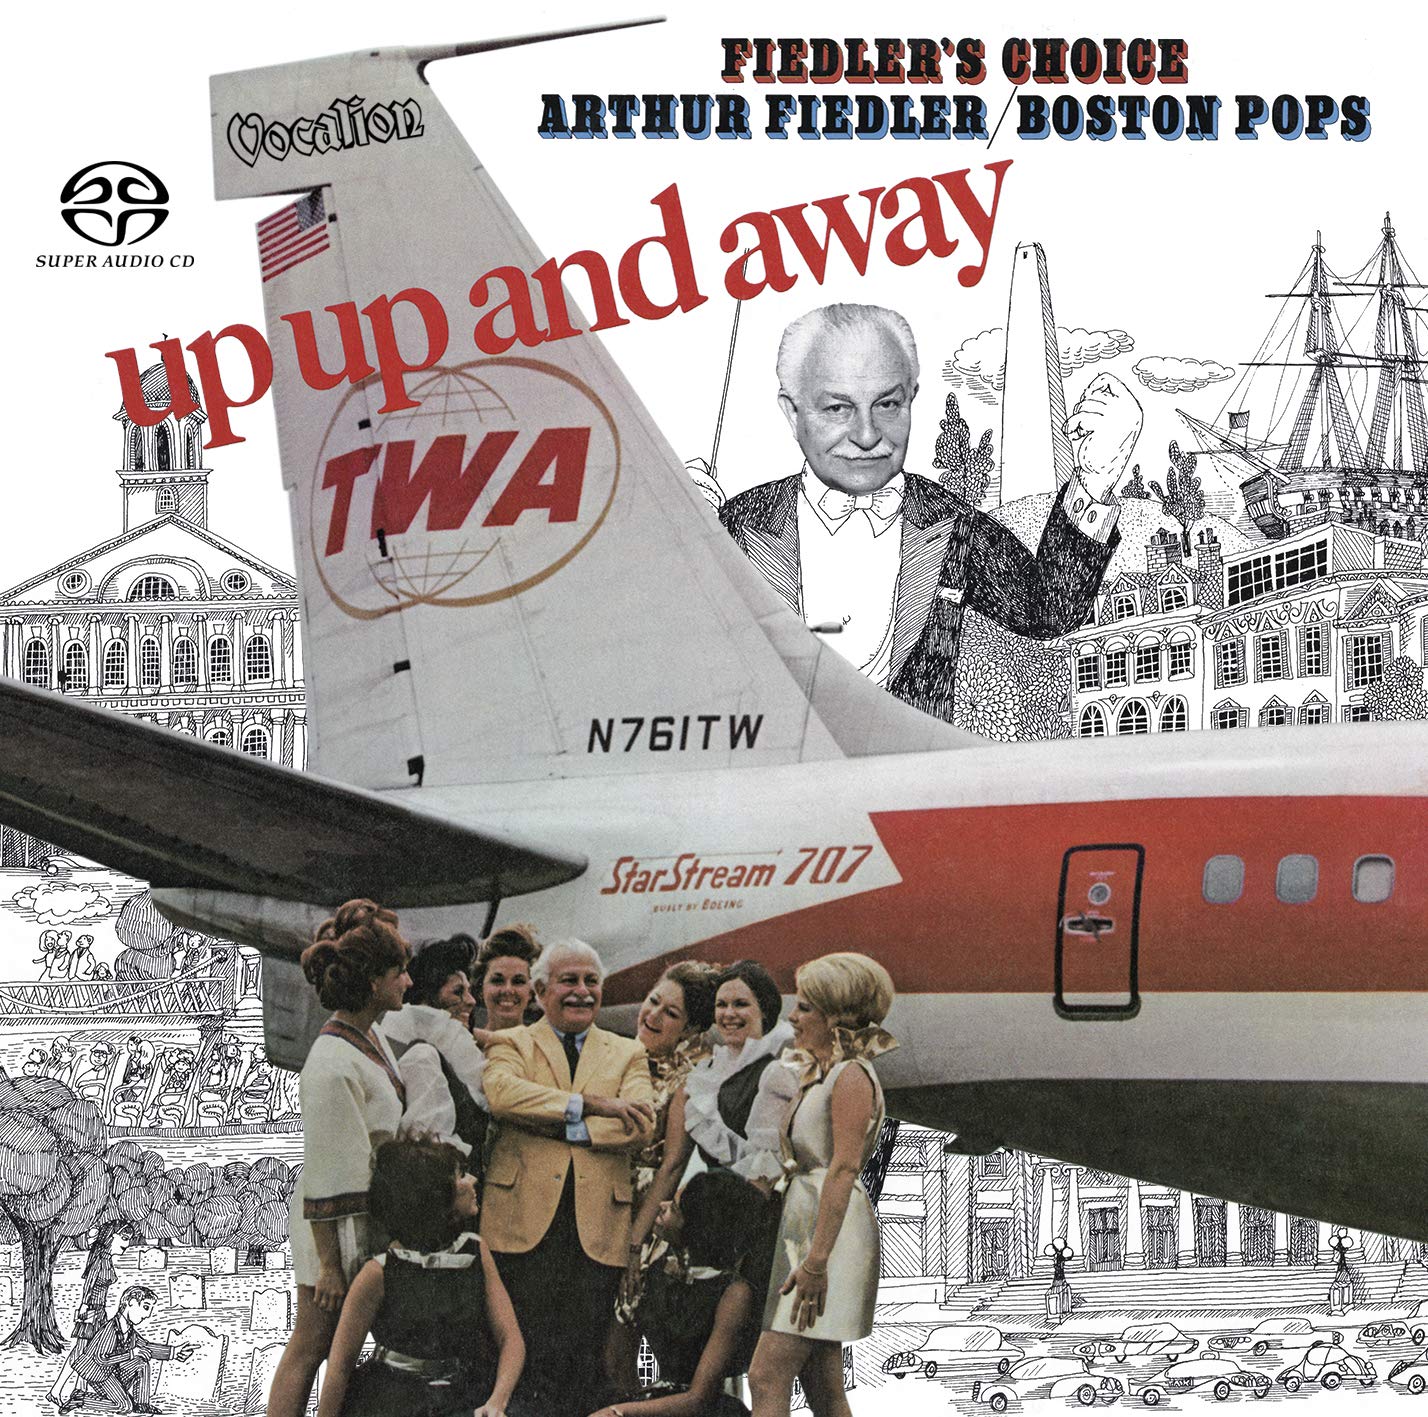 Arthur Fiedler & The Boston Pops - Up, Up and Away & Fiedler’s Choice (1968 & 1970) [Reissue 2019] SACD ISO + FLAC 24bit/96kHz